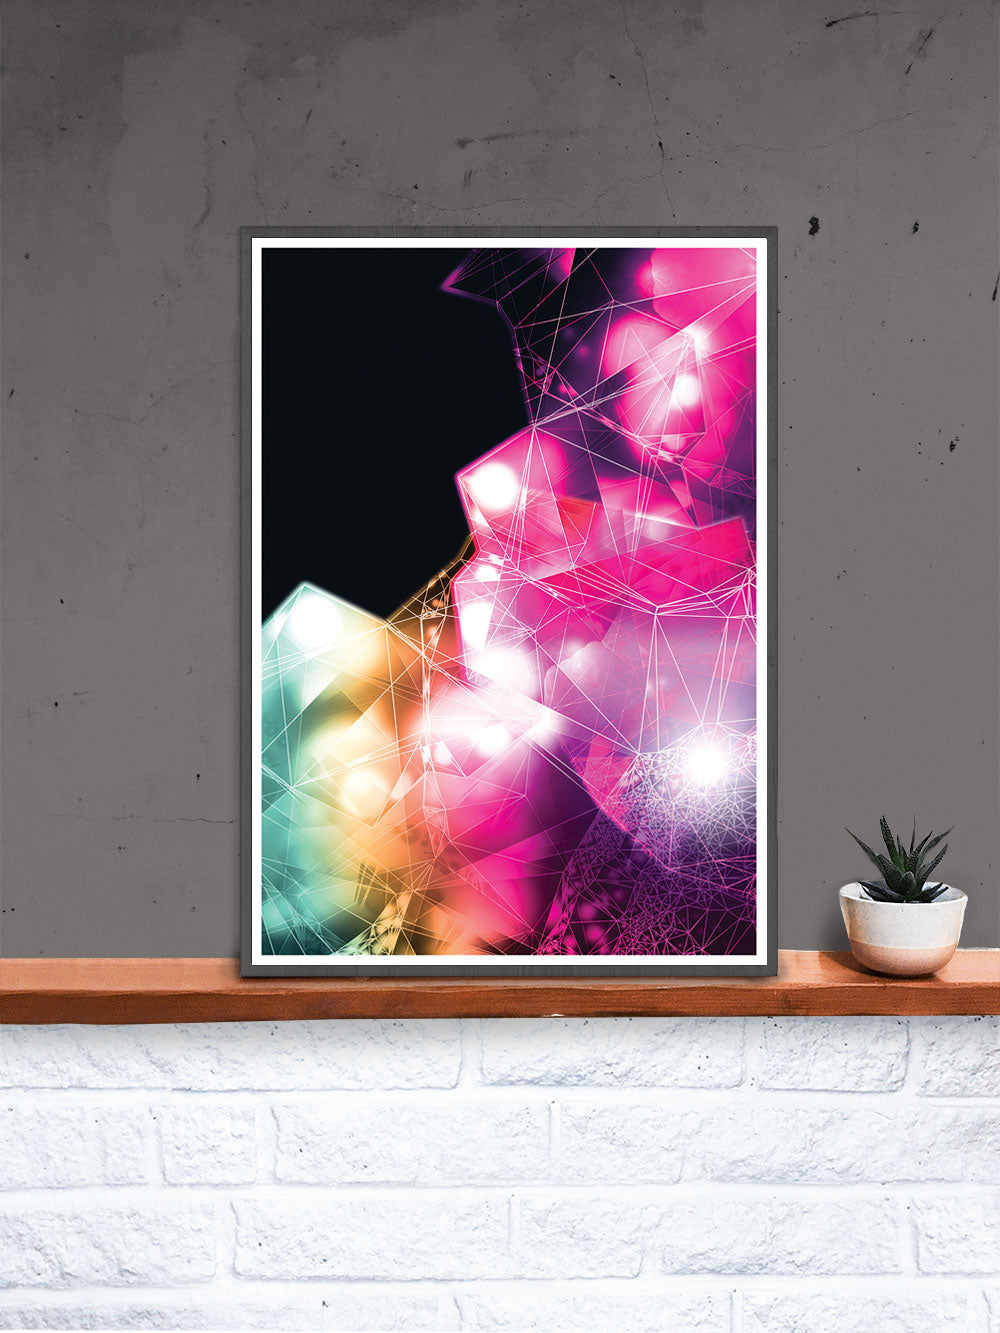 Crystal Art Print Digital Wall Art Illustration in a frame on a shelf